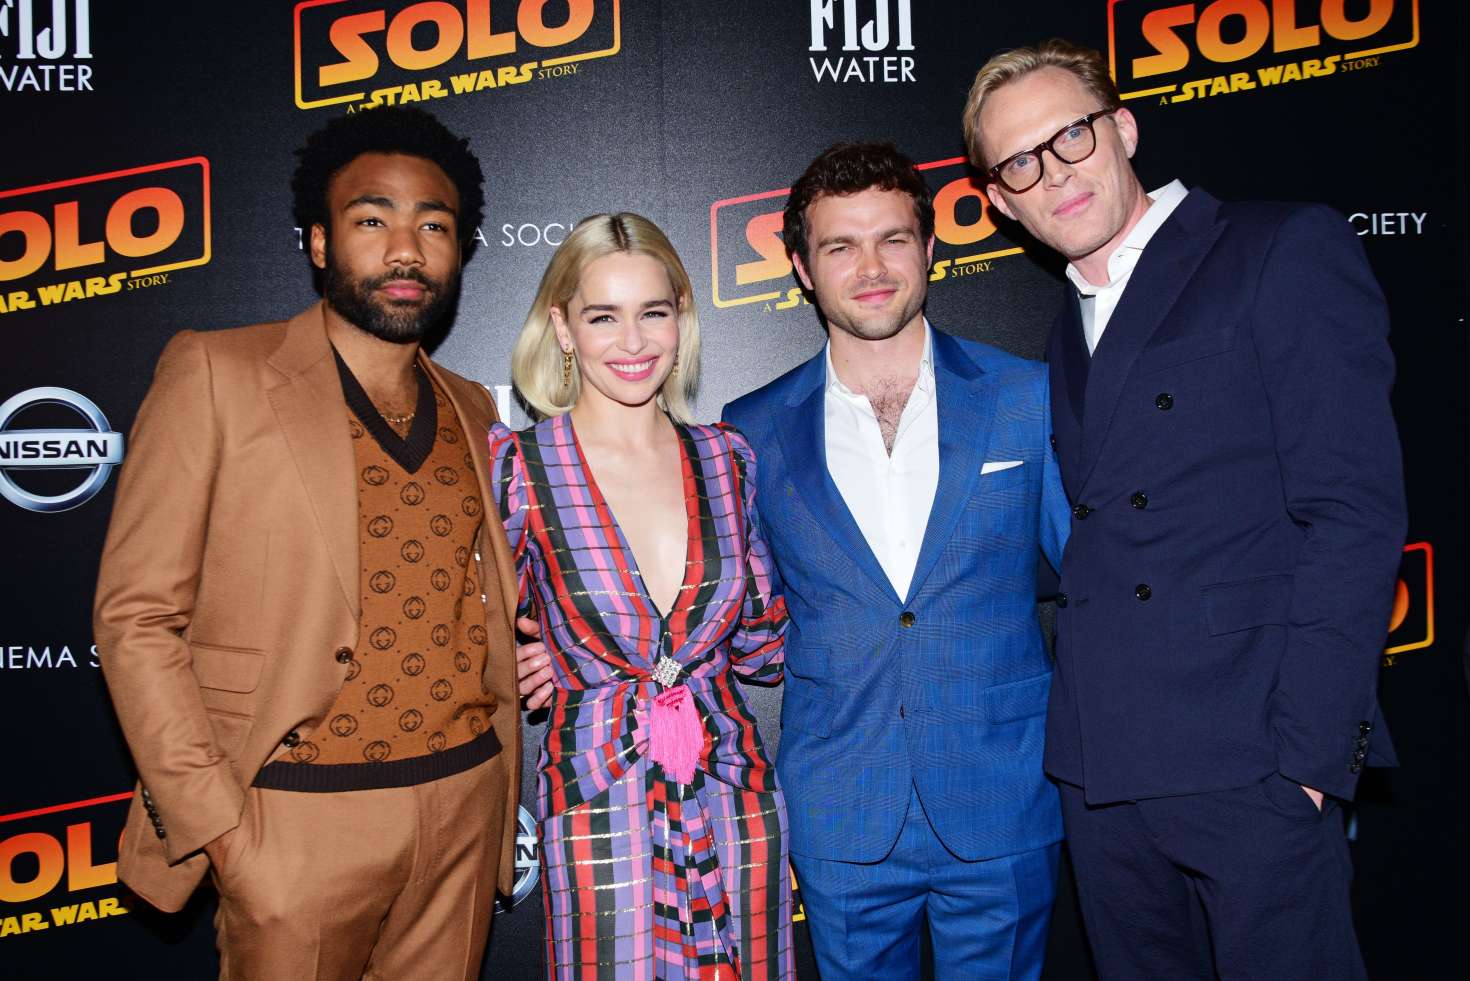 Emilia Clarke â€“ â€˜Solo: A Star Wars Storyâ€™ Premiere in New York